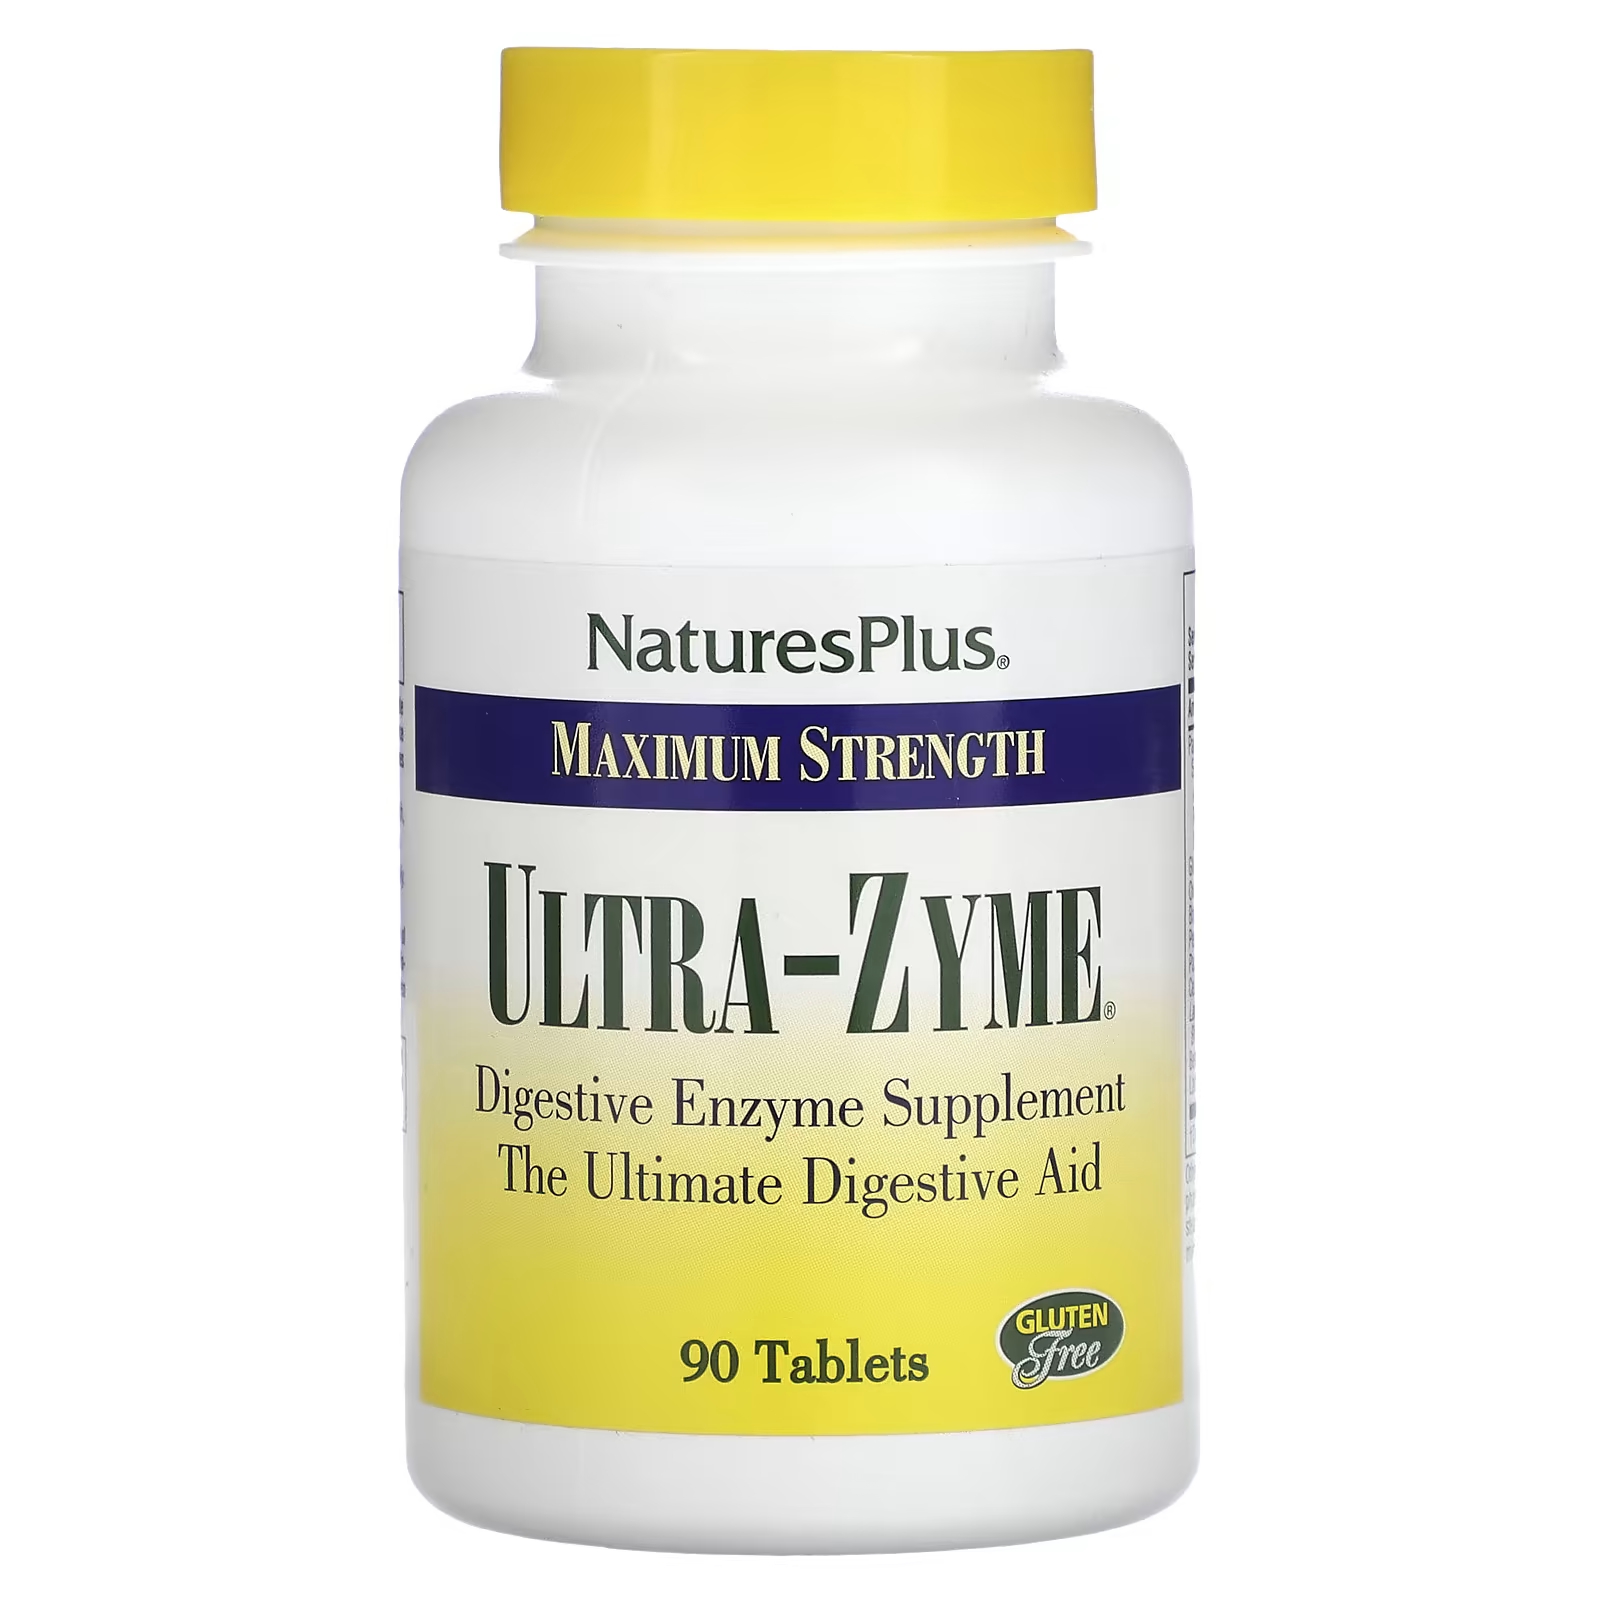 Пищевая добавка NaturesPlus Максимальная сила Ultra-Zyme, 90 таблеток цена и фото